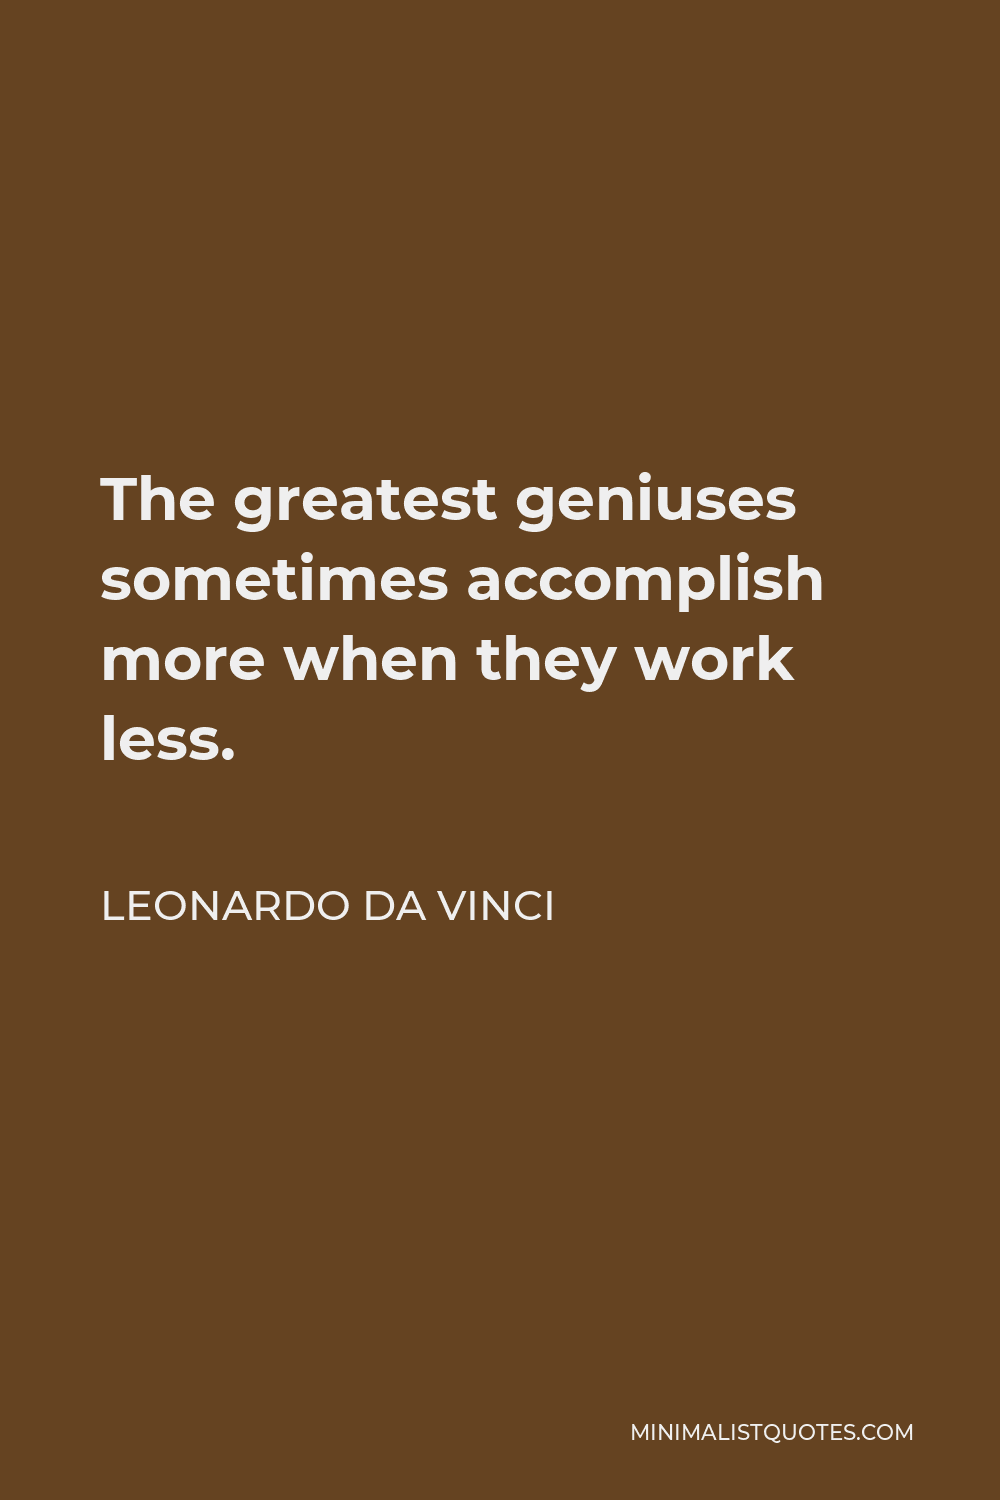 Leonardo da Vinci Quote - The greatest geniuses sometimes accomplish more when they work less.